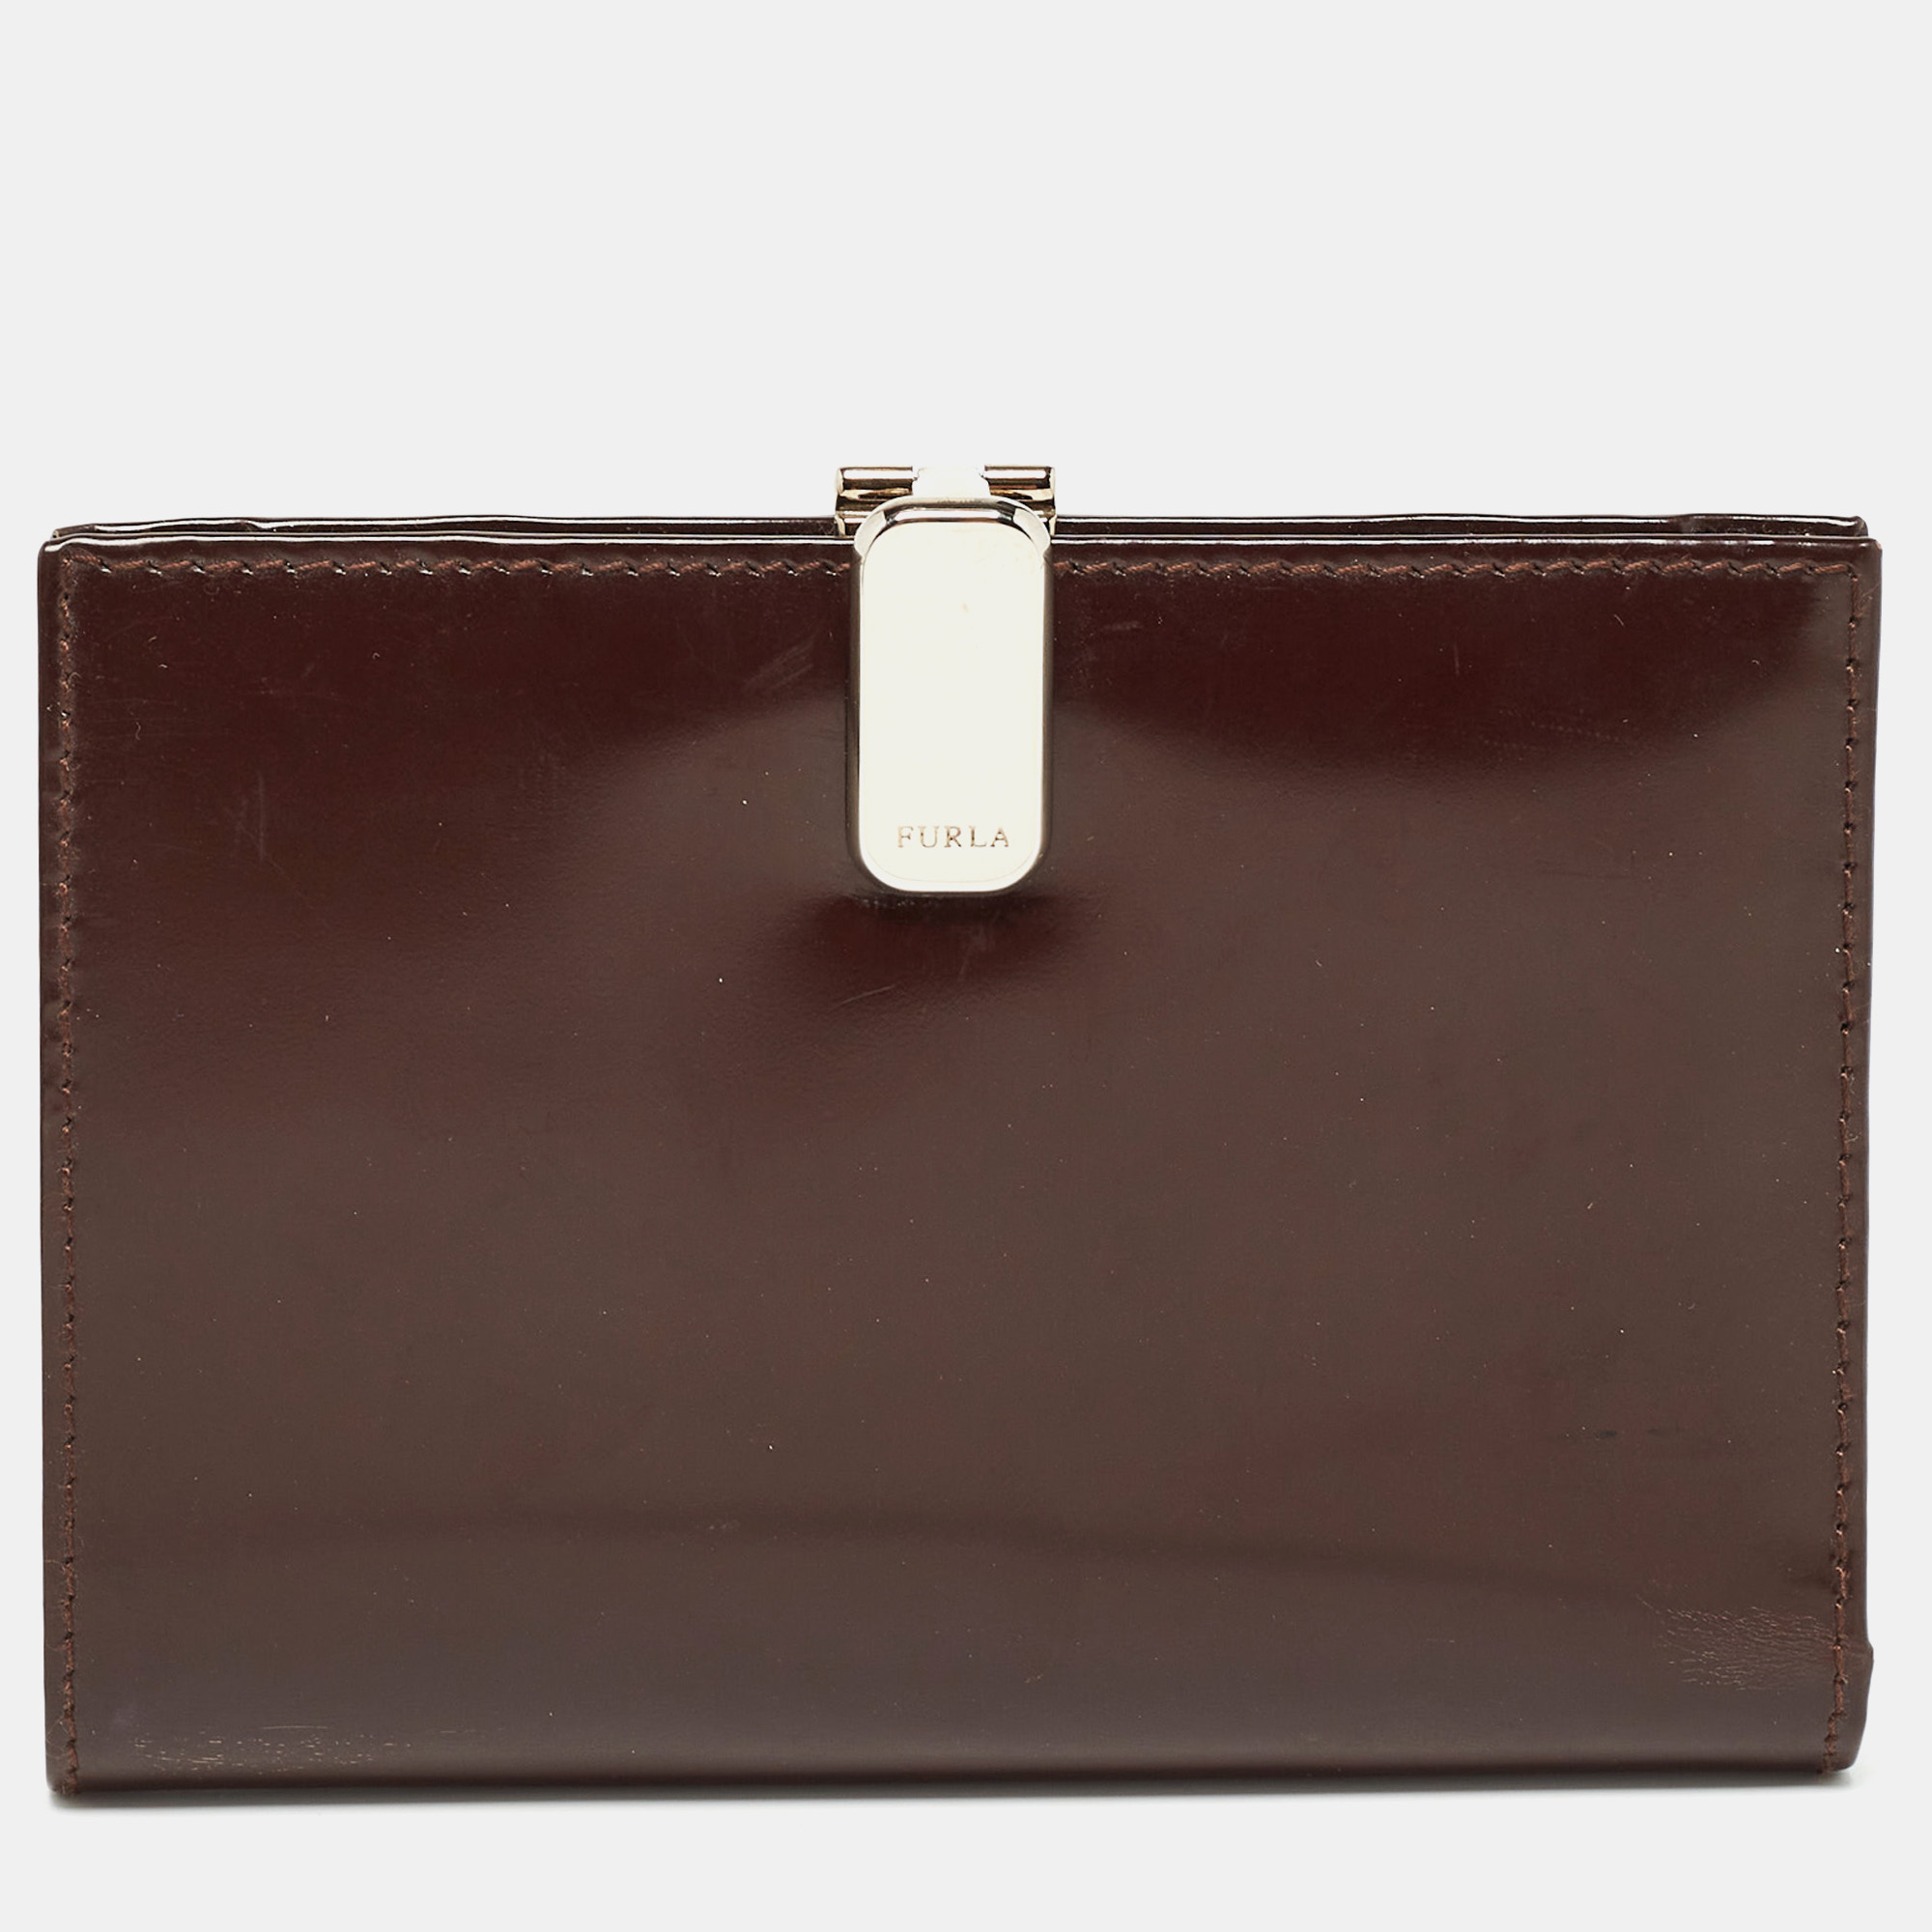 Furla brown brushed leather bifold wallet